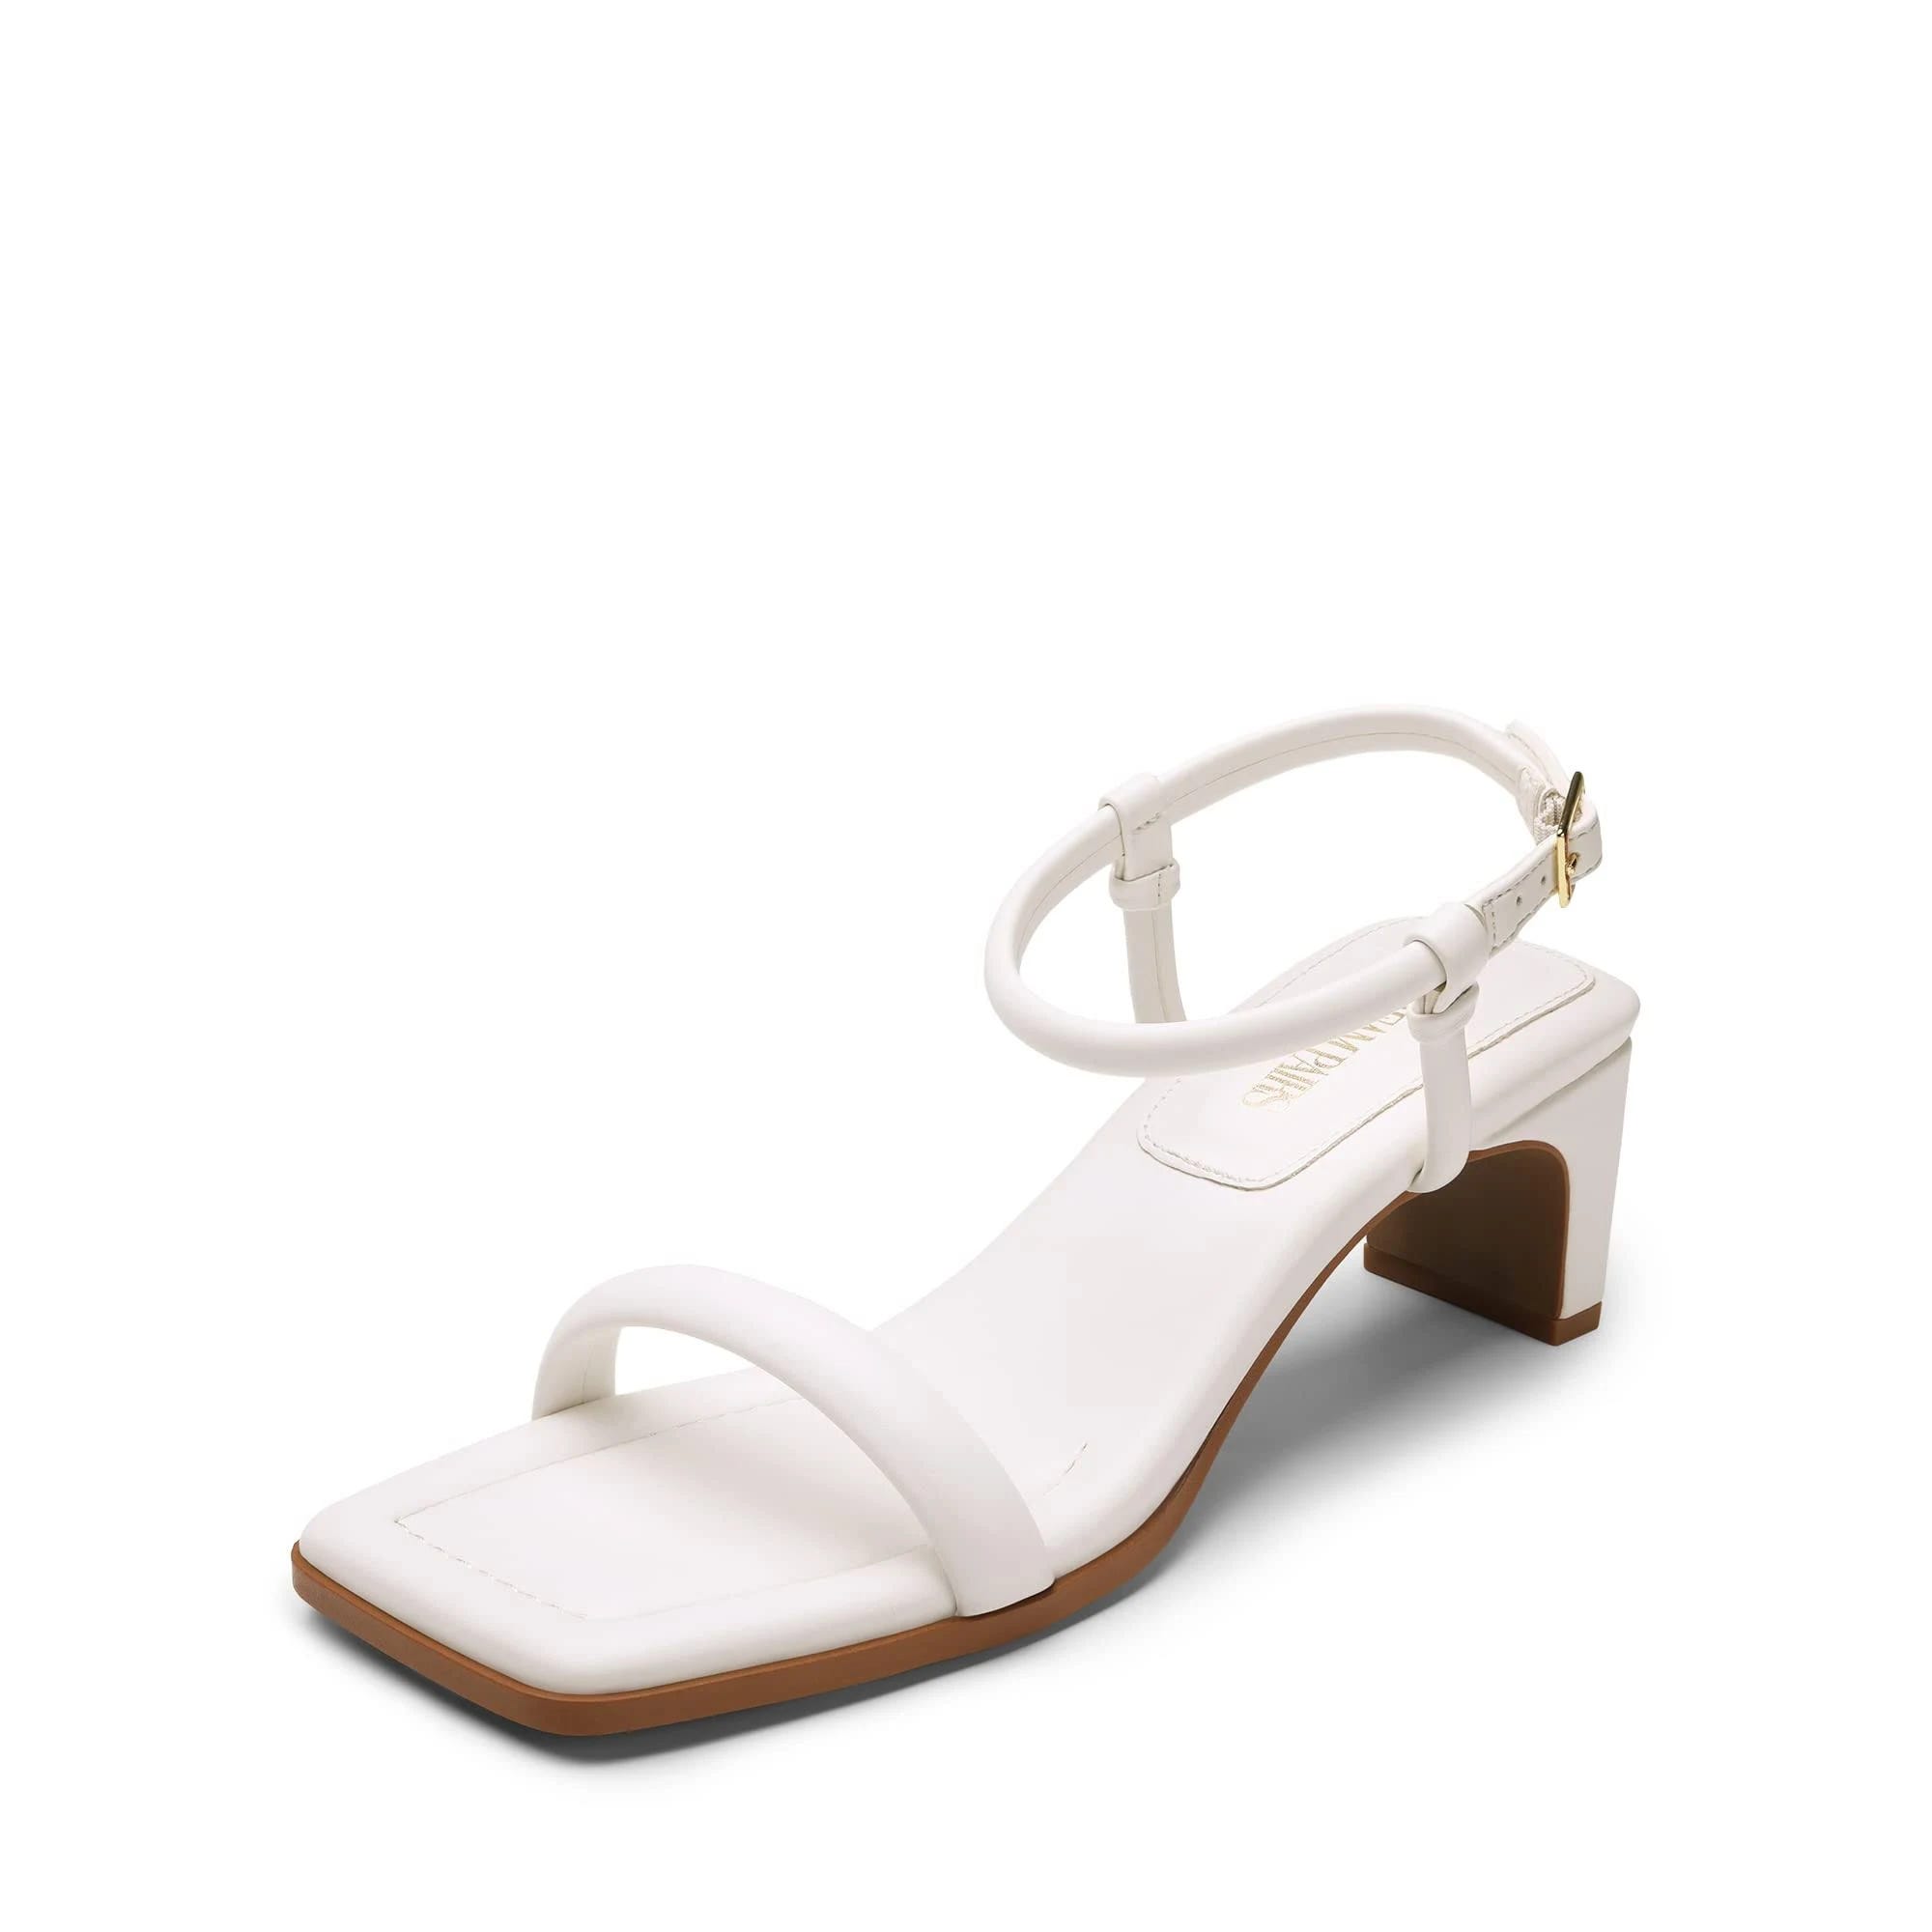 Stylish White Ankle Strap Heeled Sandal with Padded Foam Insole | Image